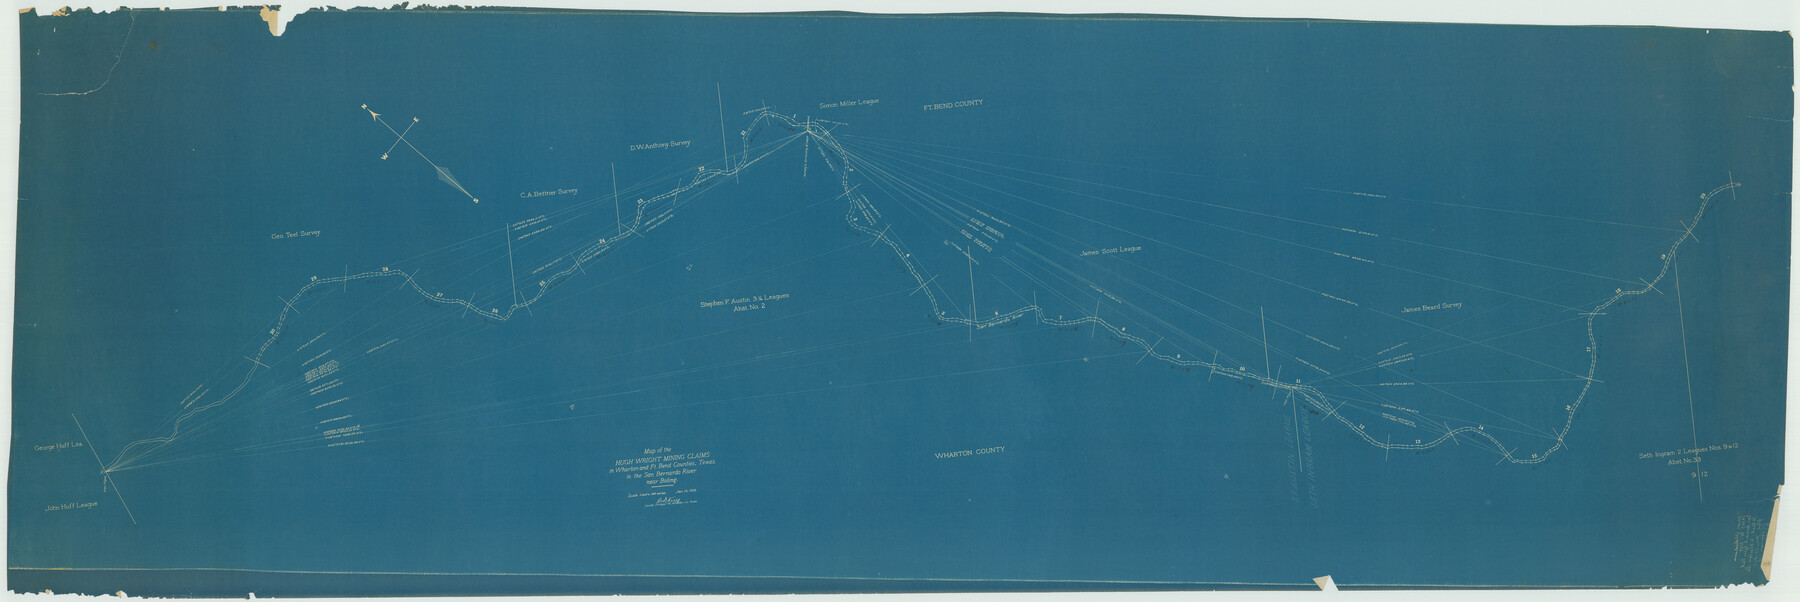 65579, [Sketch for Mineral Application 19560 - 19588 - San Bernard River], General Map Collection